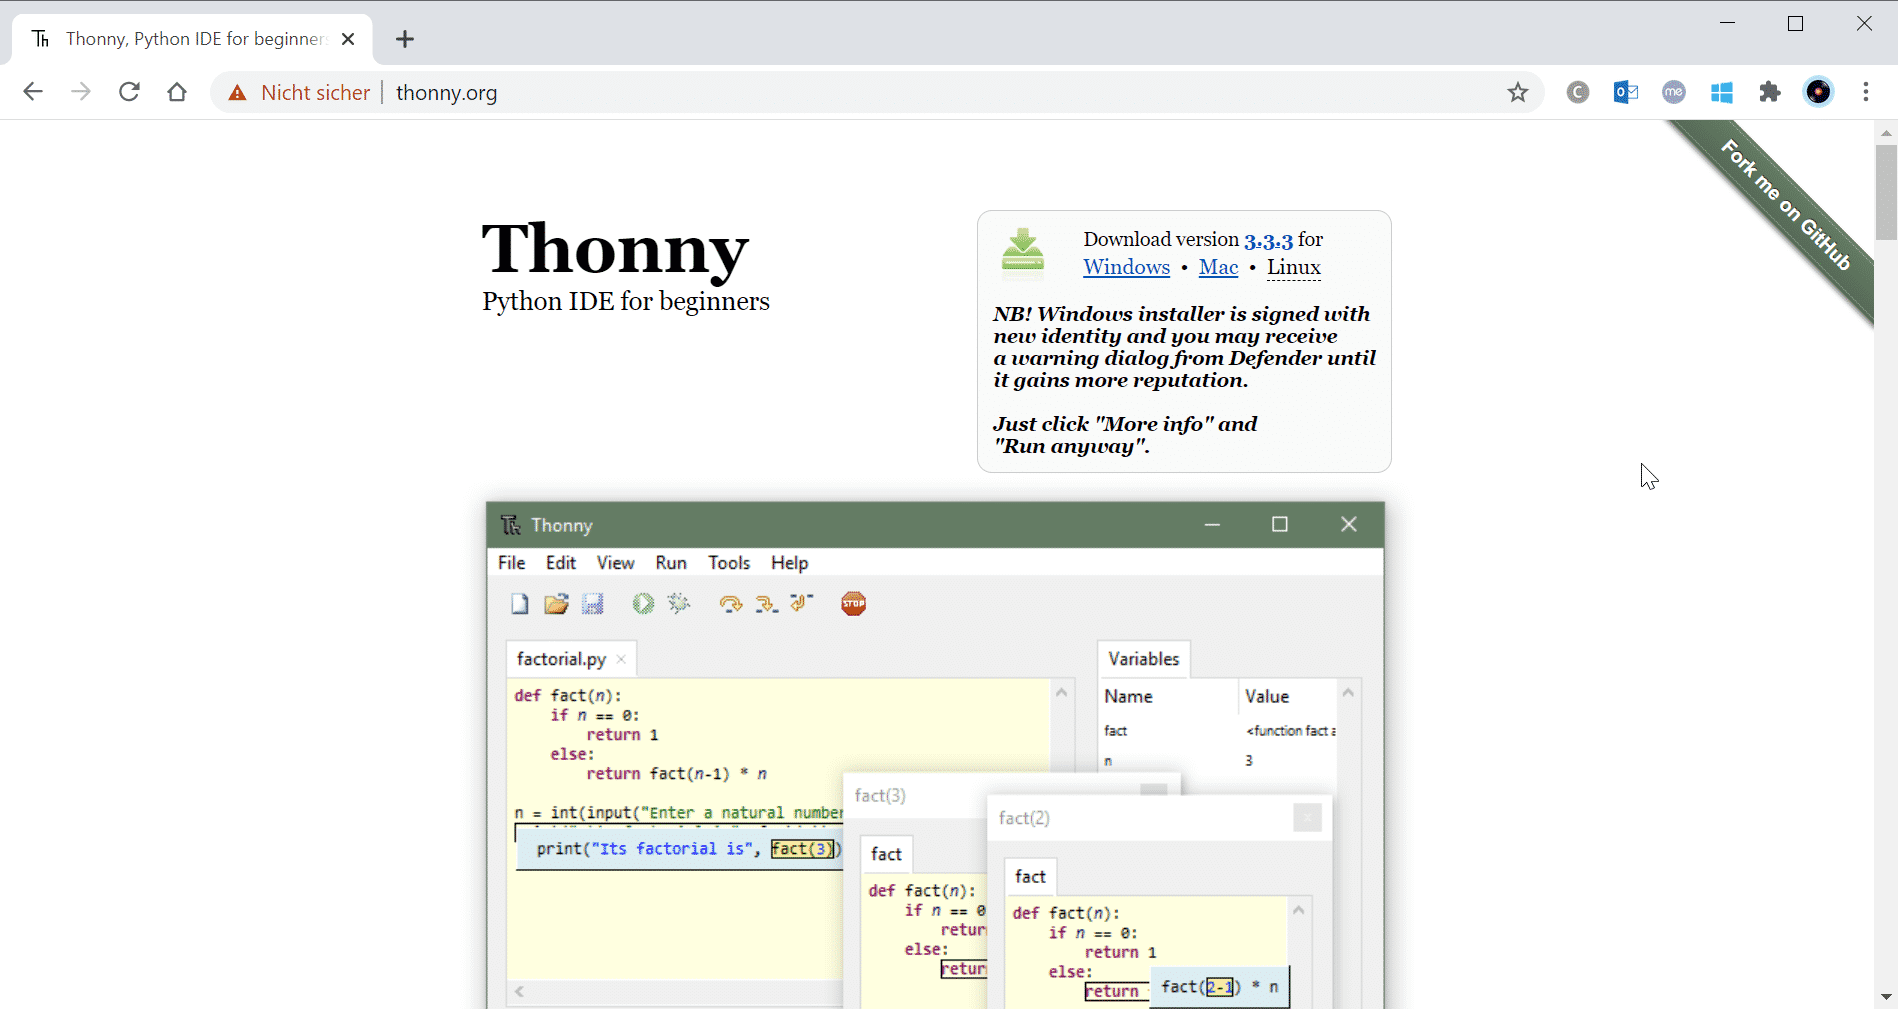 Website of the Python IDE thonny.org